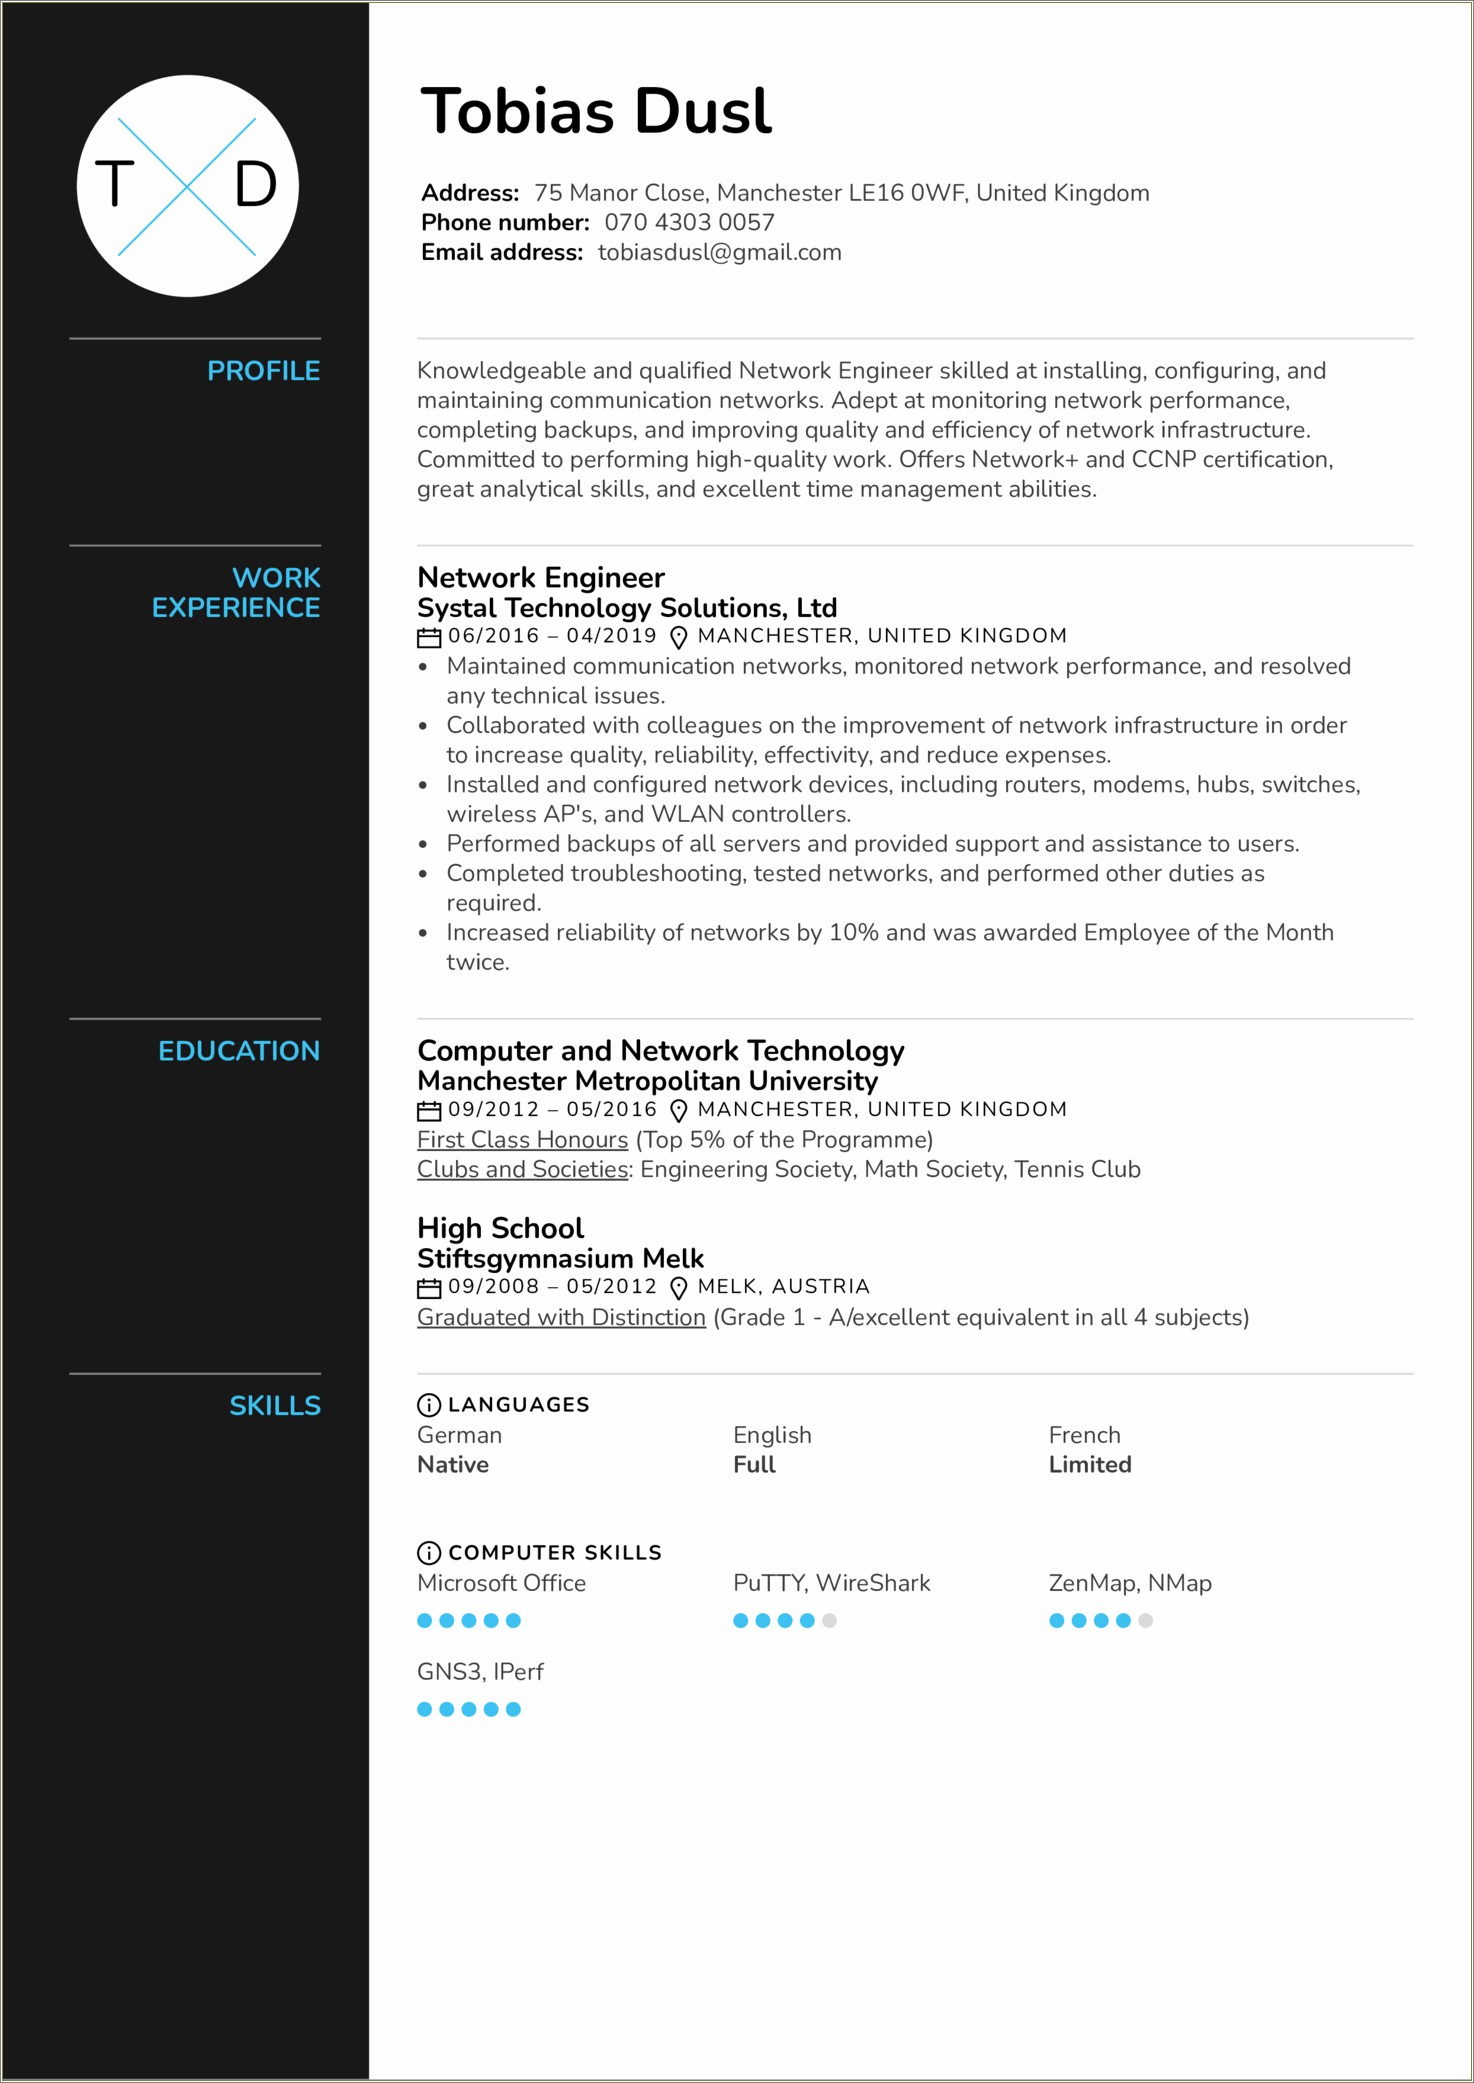 Sample Network Engineer Resume.doc